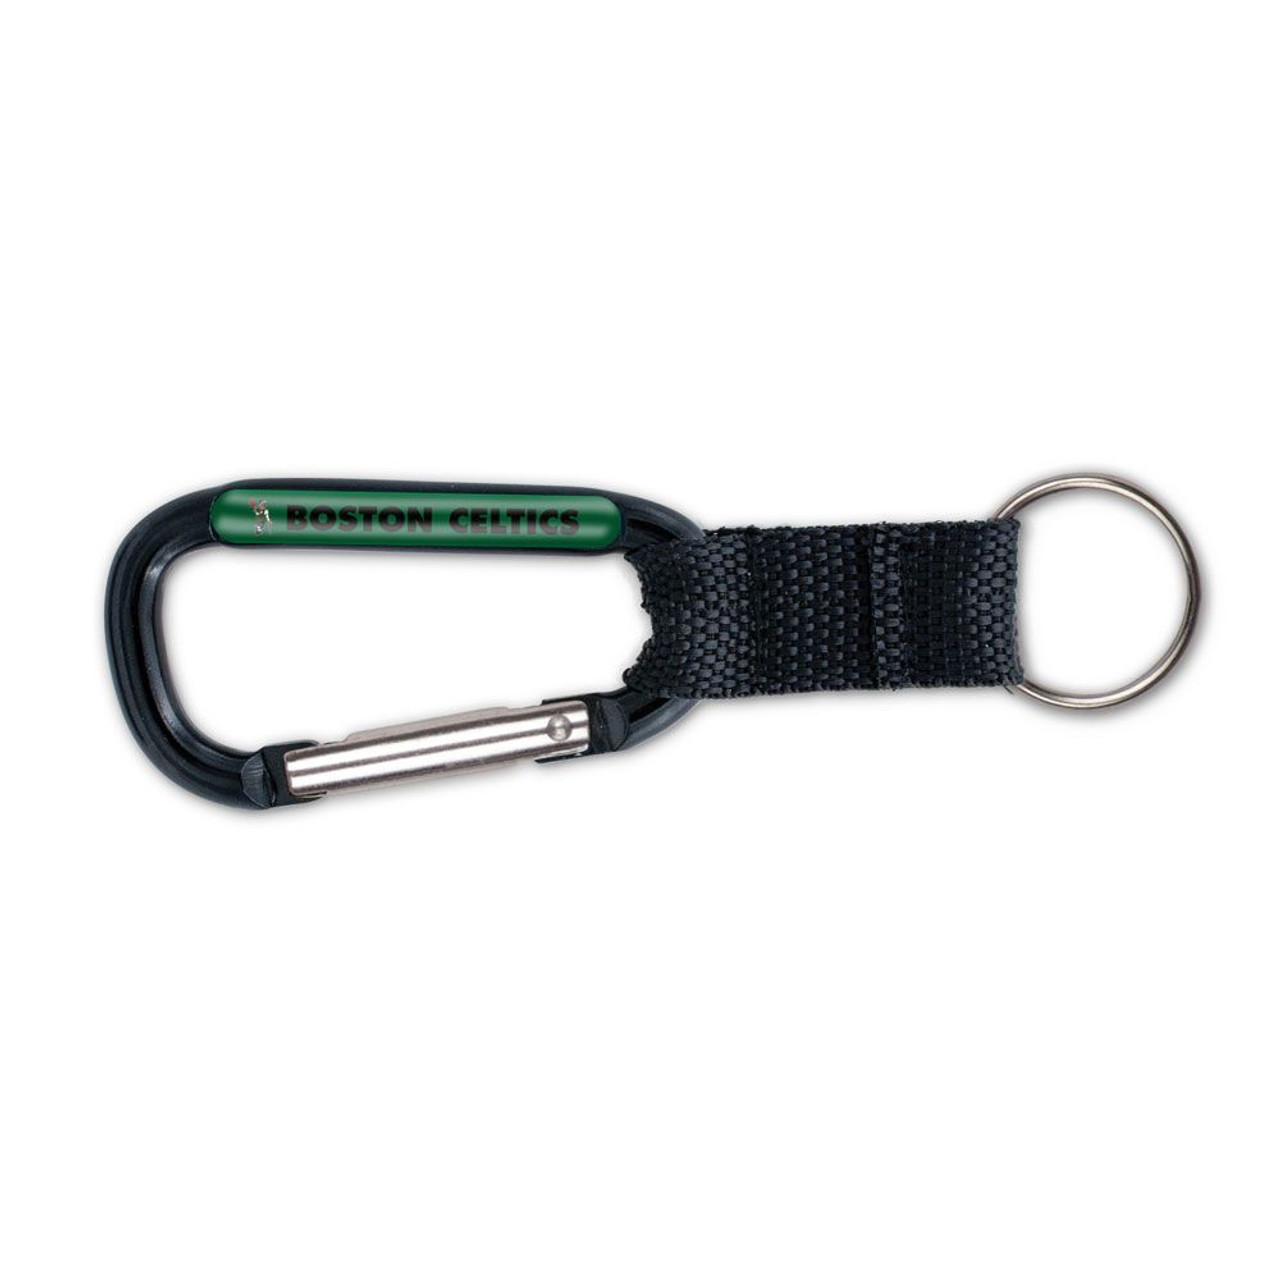 Boston Celtics Carabiner Key Chain